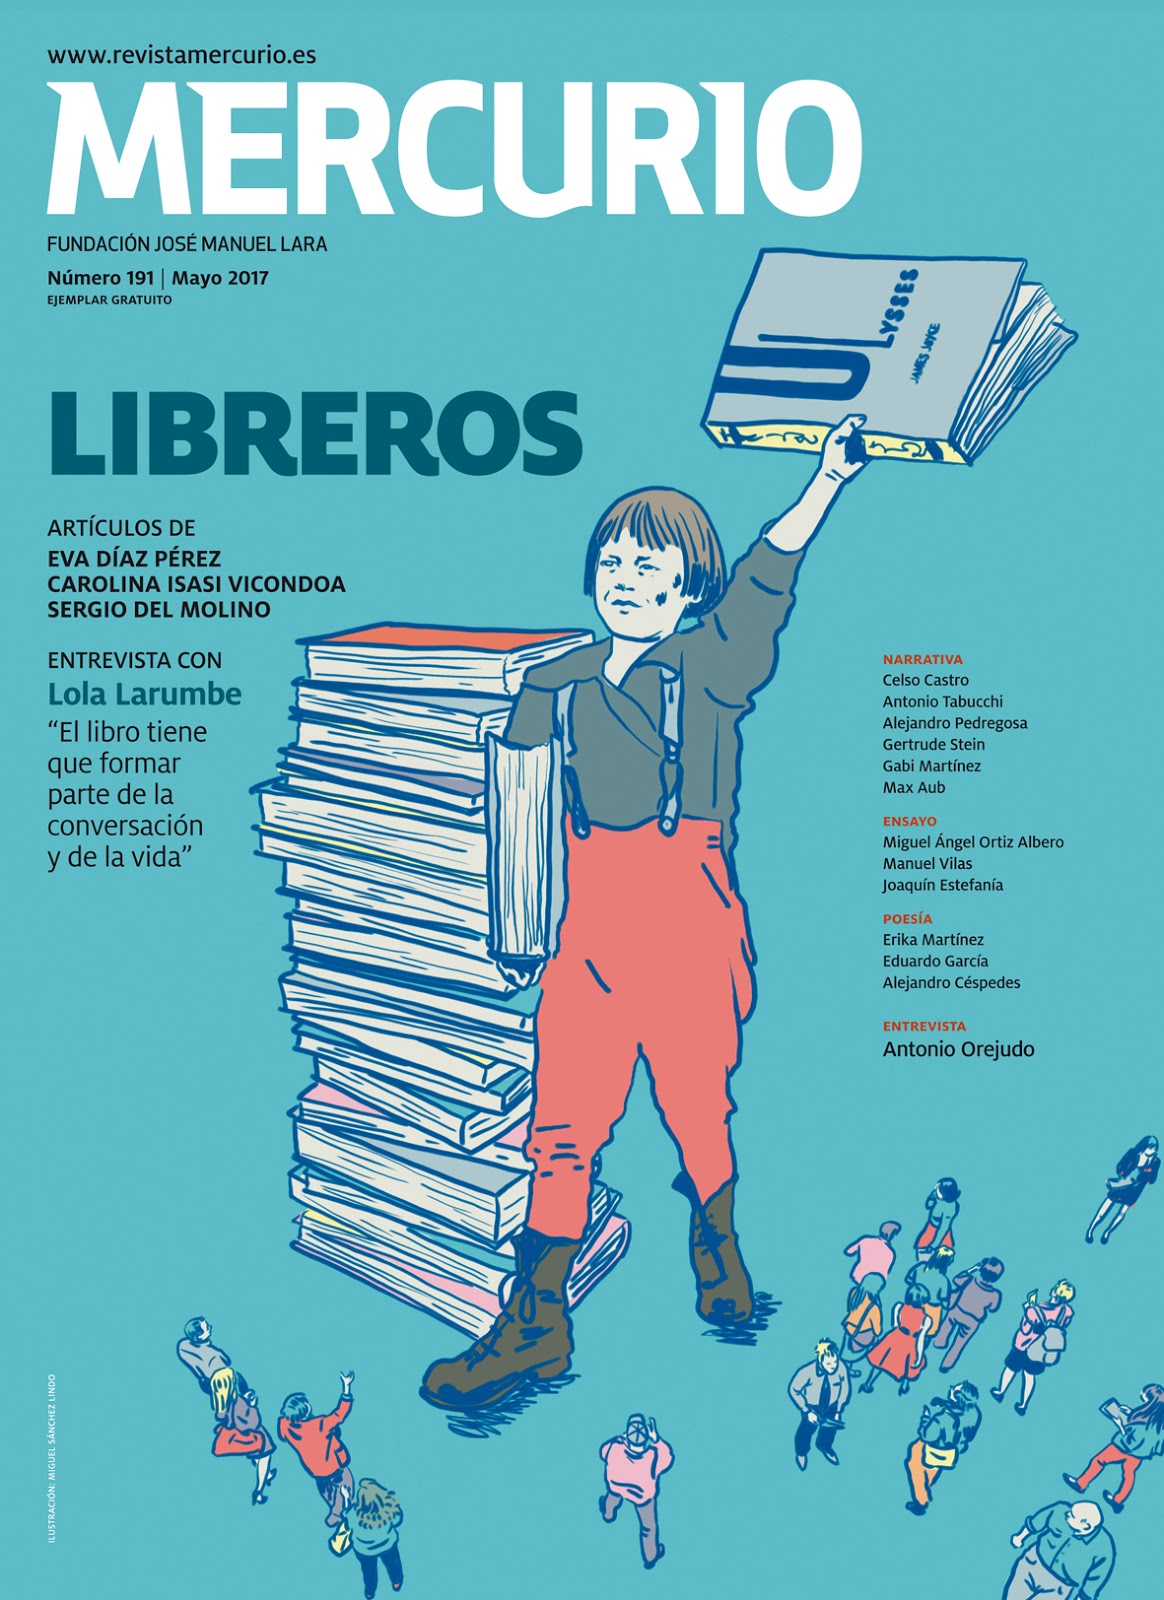 CRUCE DE CABLES: Revista Mercurio. Especial Libreros. Descarga en Pdf.